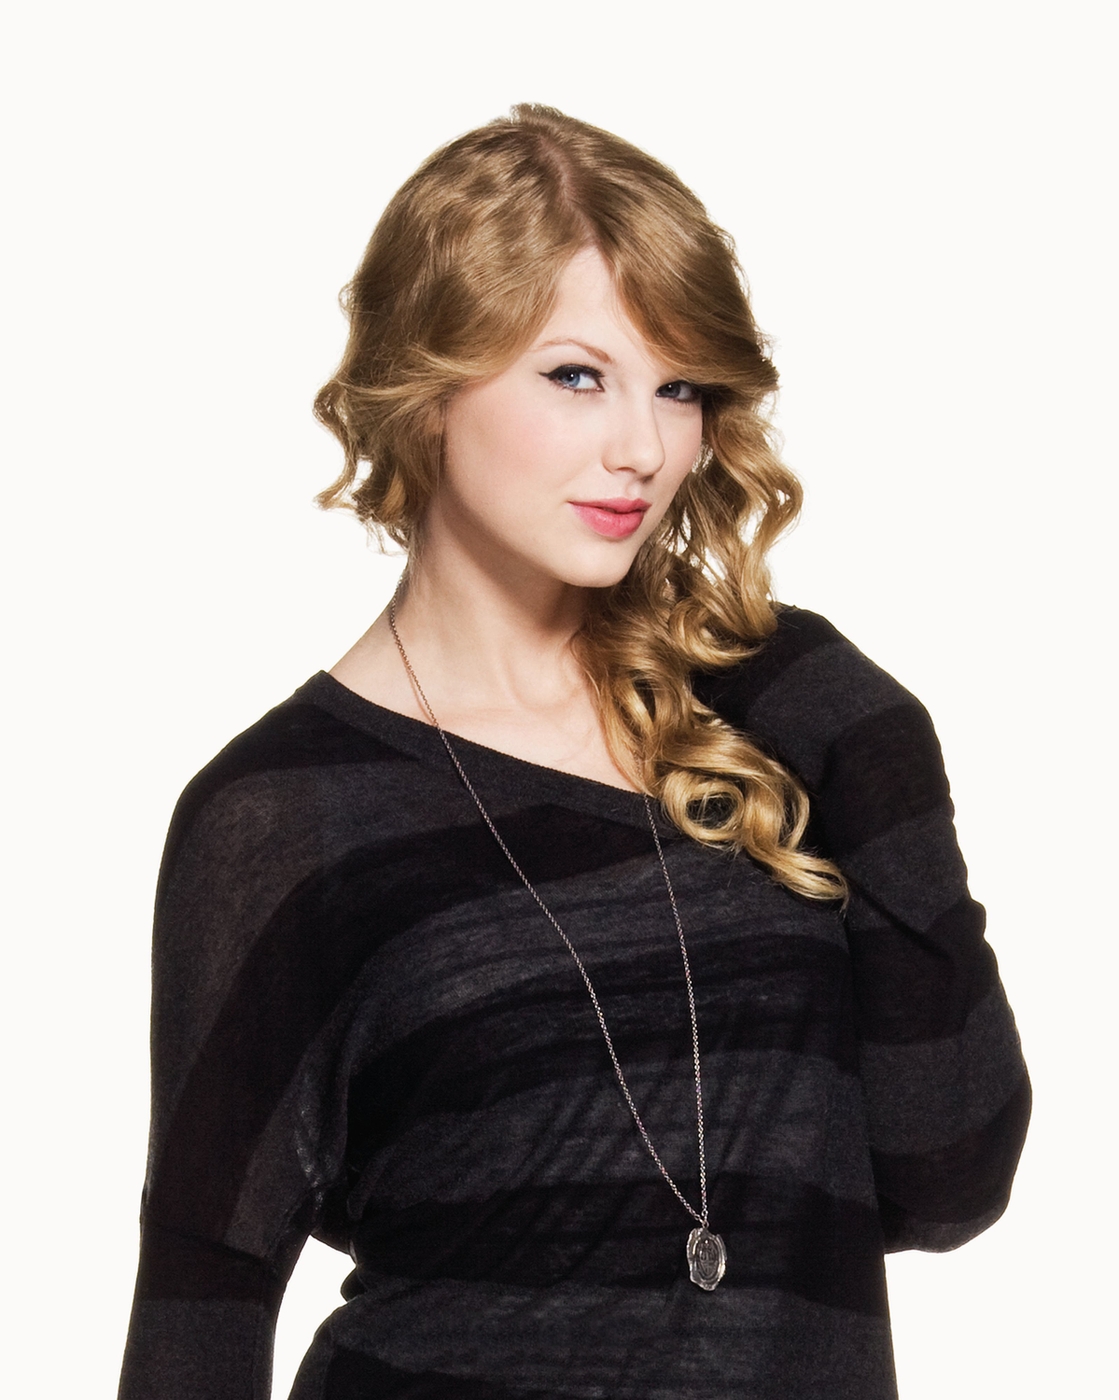 People 1119x1400 Taylor Swift blonde women singer simple background blue eyes long hair